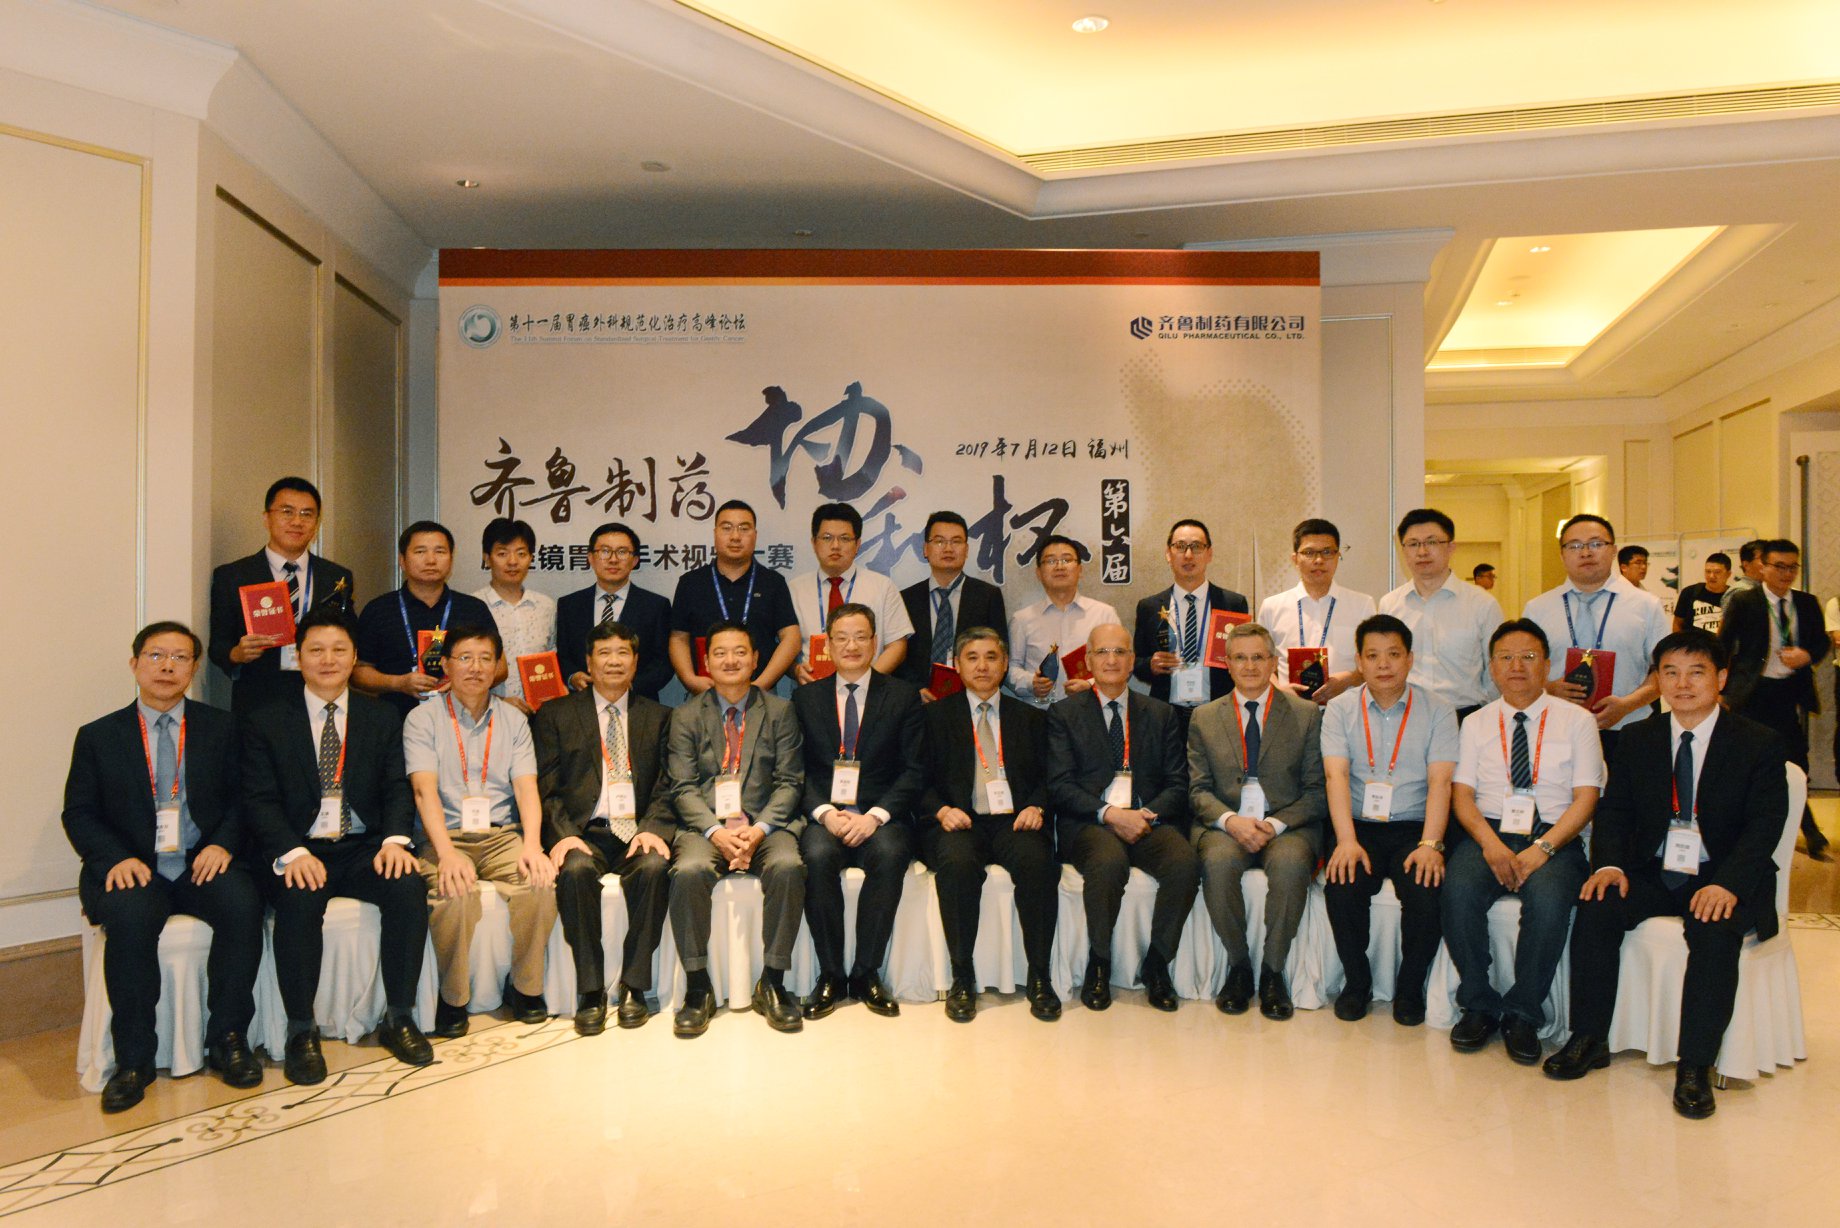 La chirurgia digestiva di Terni nell’Unità di Chirurgia Gastrica internazionale insieme a Fuzhou e Los Angeles